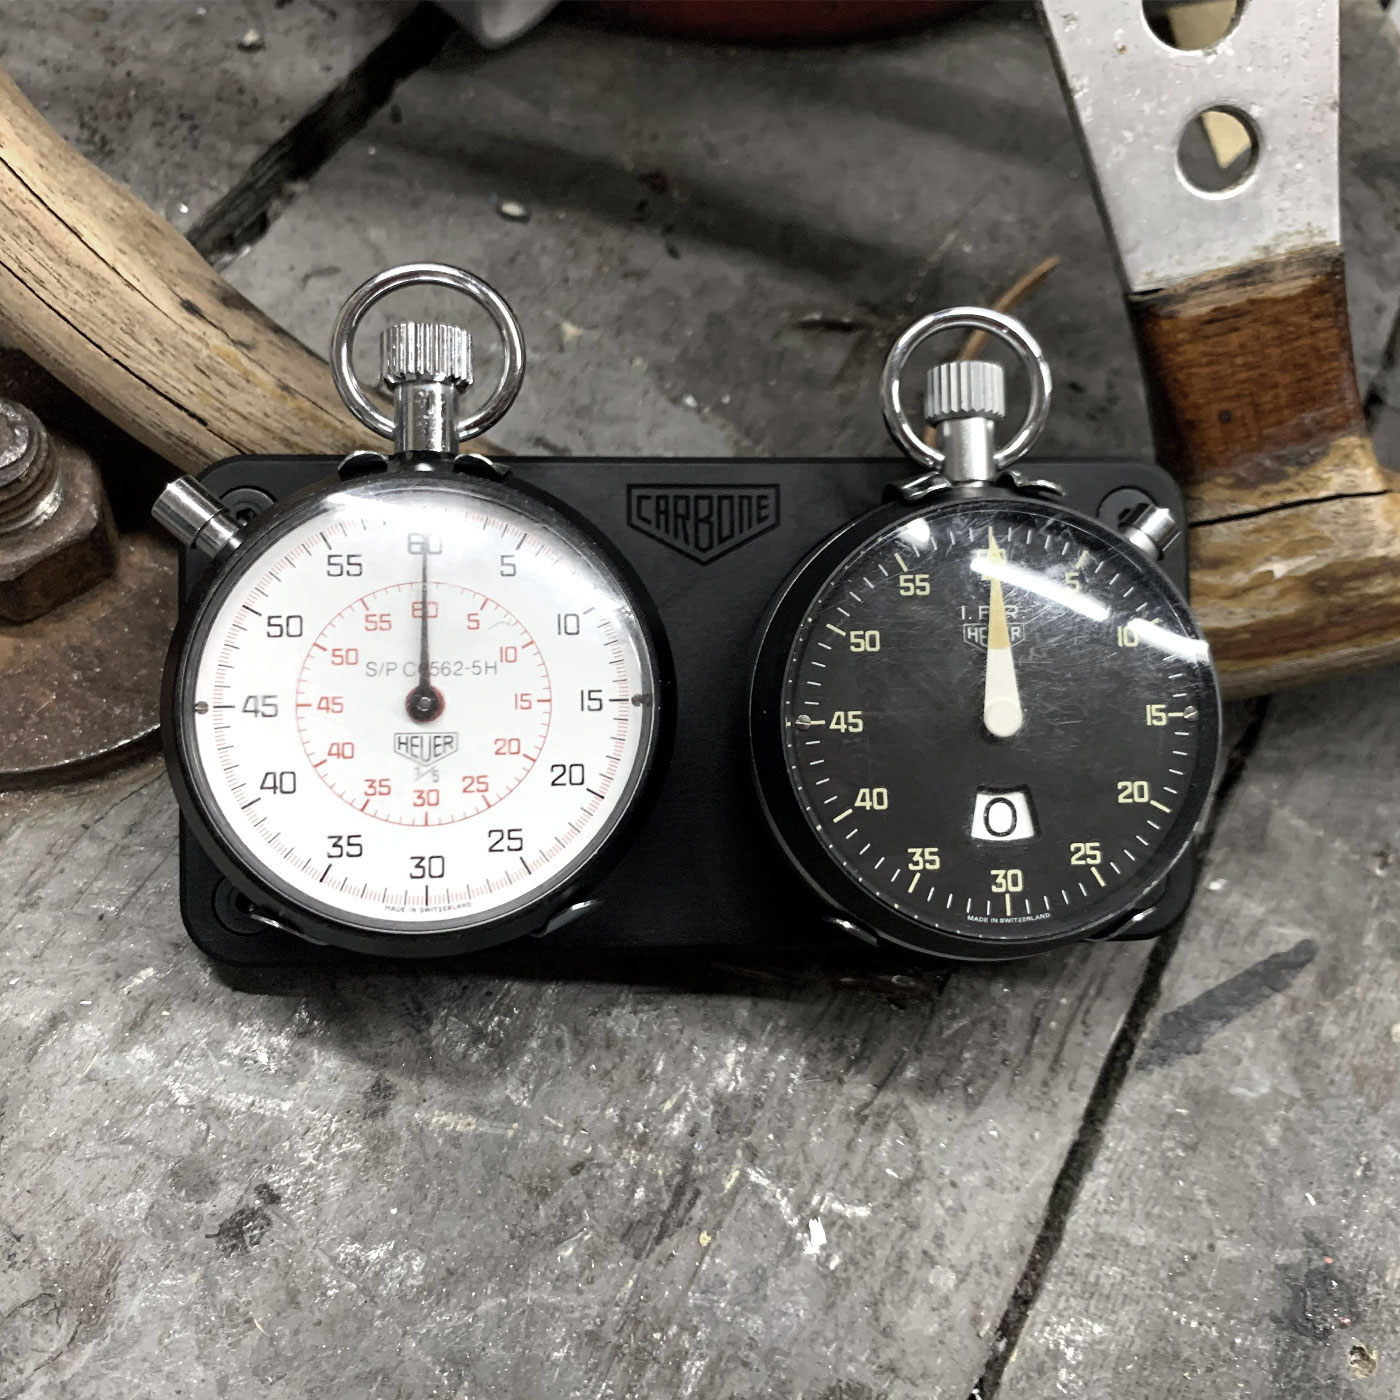 Vintage Heuer Ref.40890 62mm black stopwatch #1